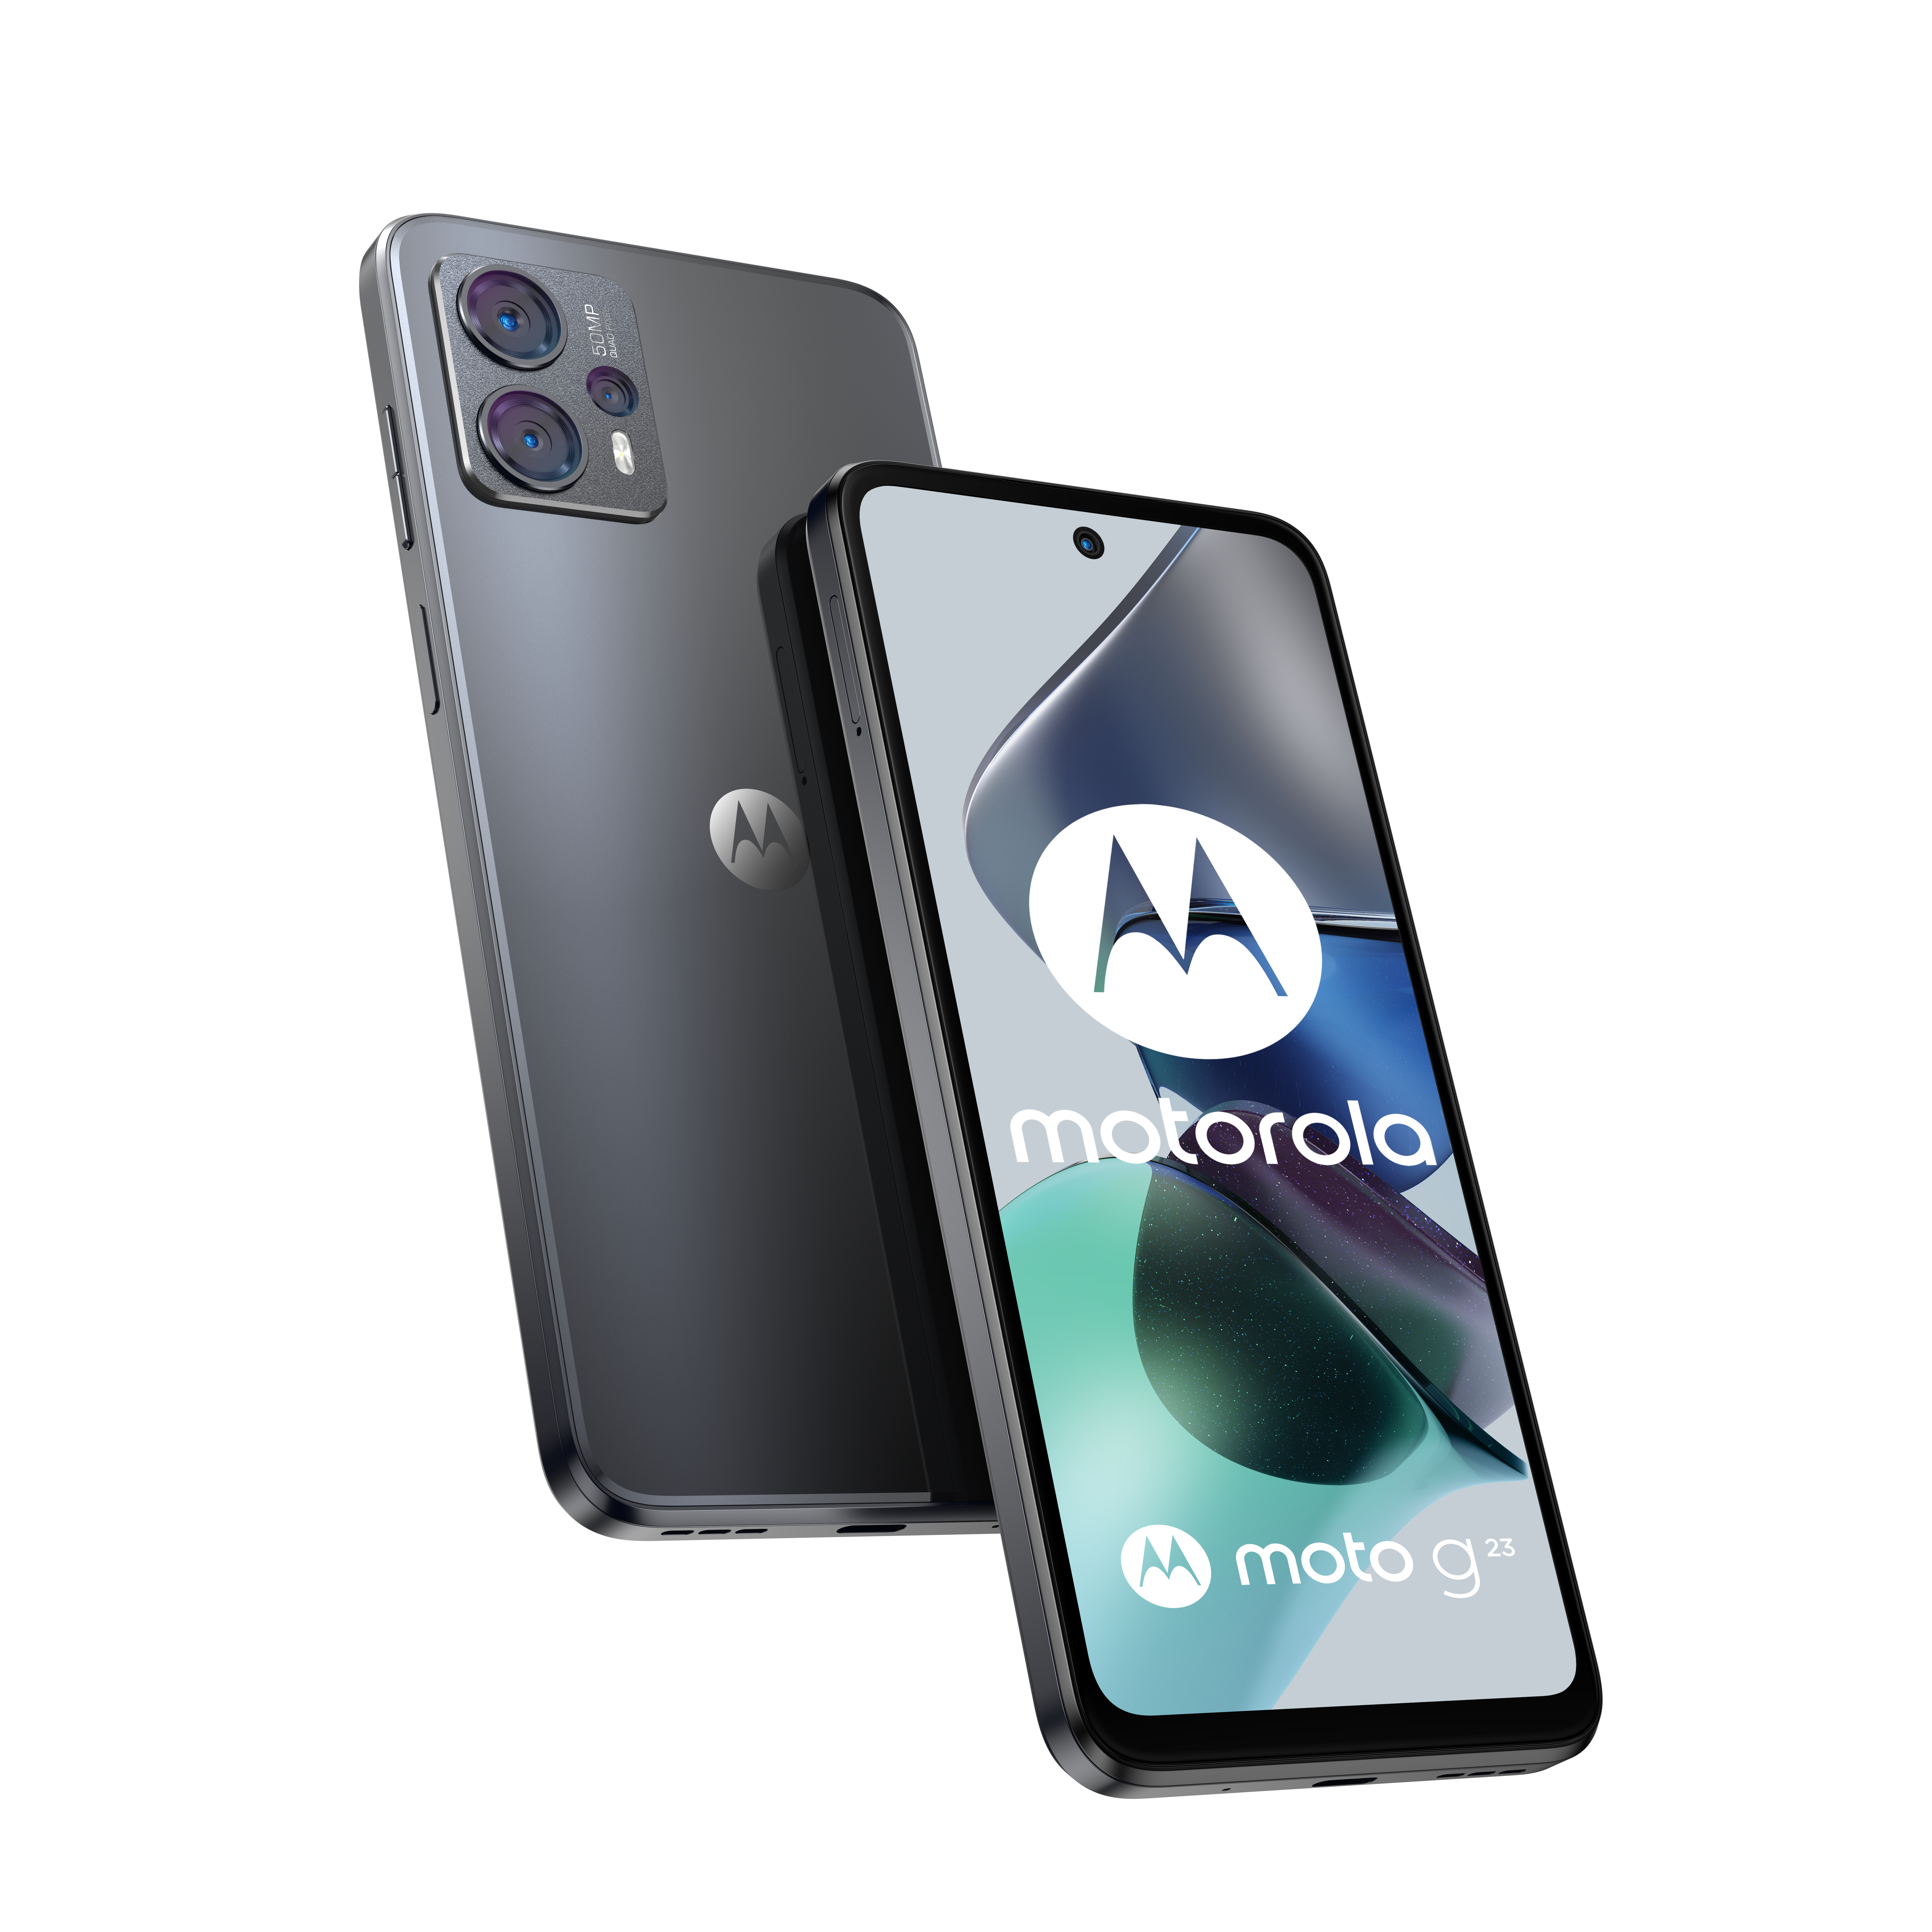 Image of Motorola Moto G moto g23 (tripla fotocamera 50 MP, batteria 5000 mAH, Dolby Atmos Stereo Speakers, 8/128 GB espandibile, Display 6.53" 90Hz, NFC, Dual SIM, Android 13), cover inclusa